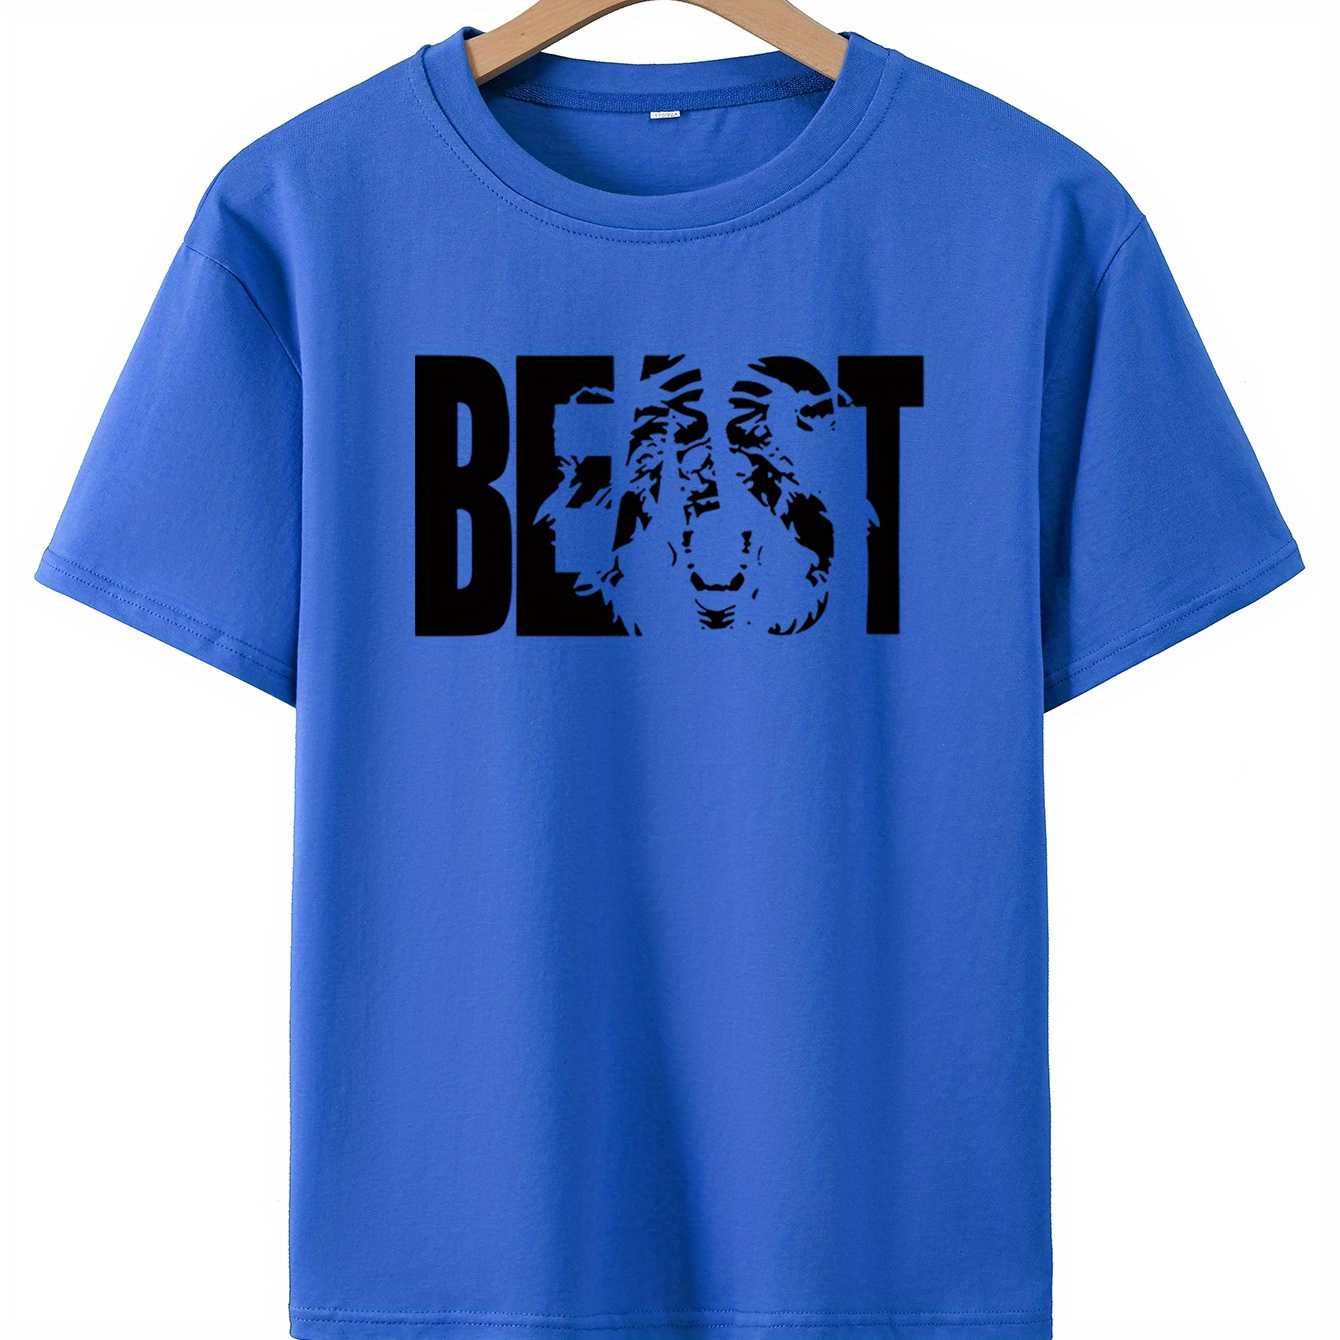 

Print Boy's Crew Neck T-shirt, Short Sleeve Comfy Versatile Tee Tops, Summer Casual Clothing